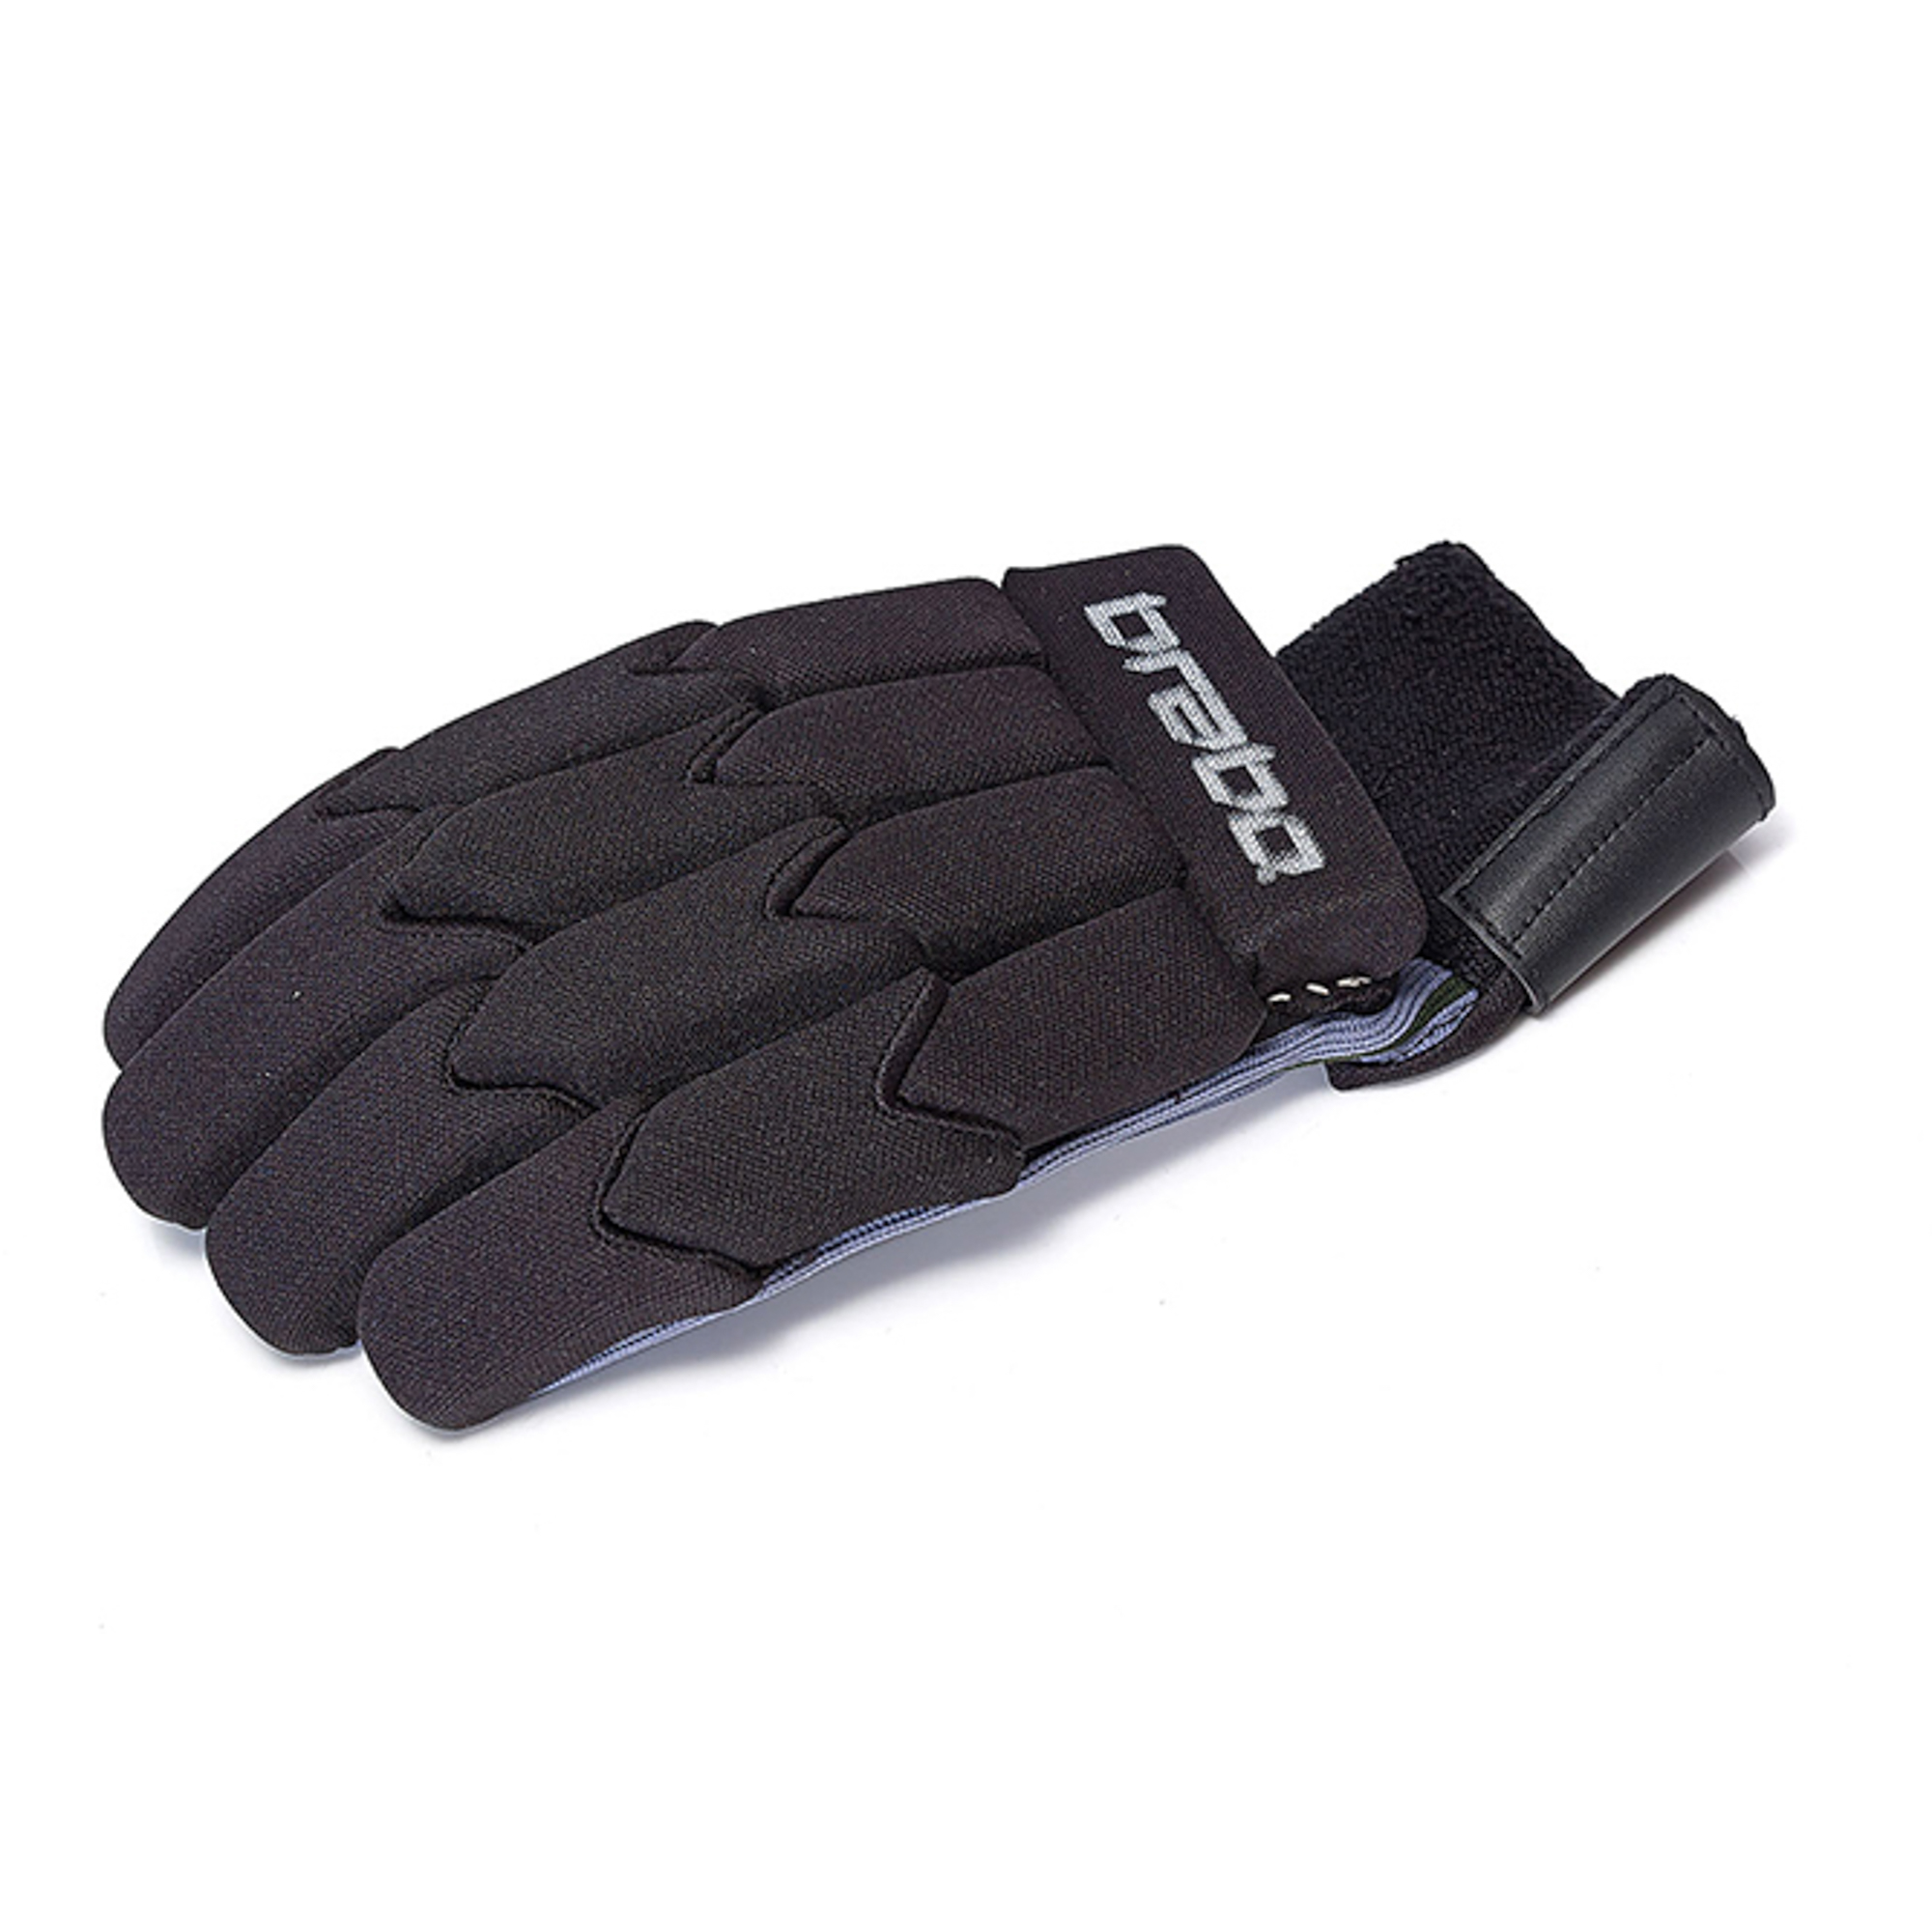 317.01054.010 - Brabo F1 Pro Right Hand - Brabo Gloves - Accessories - Brabo Hockey - Producten Kubus Sports